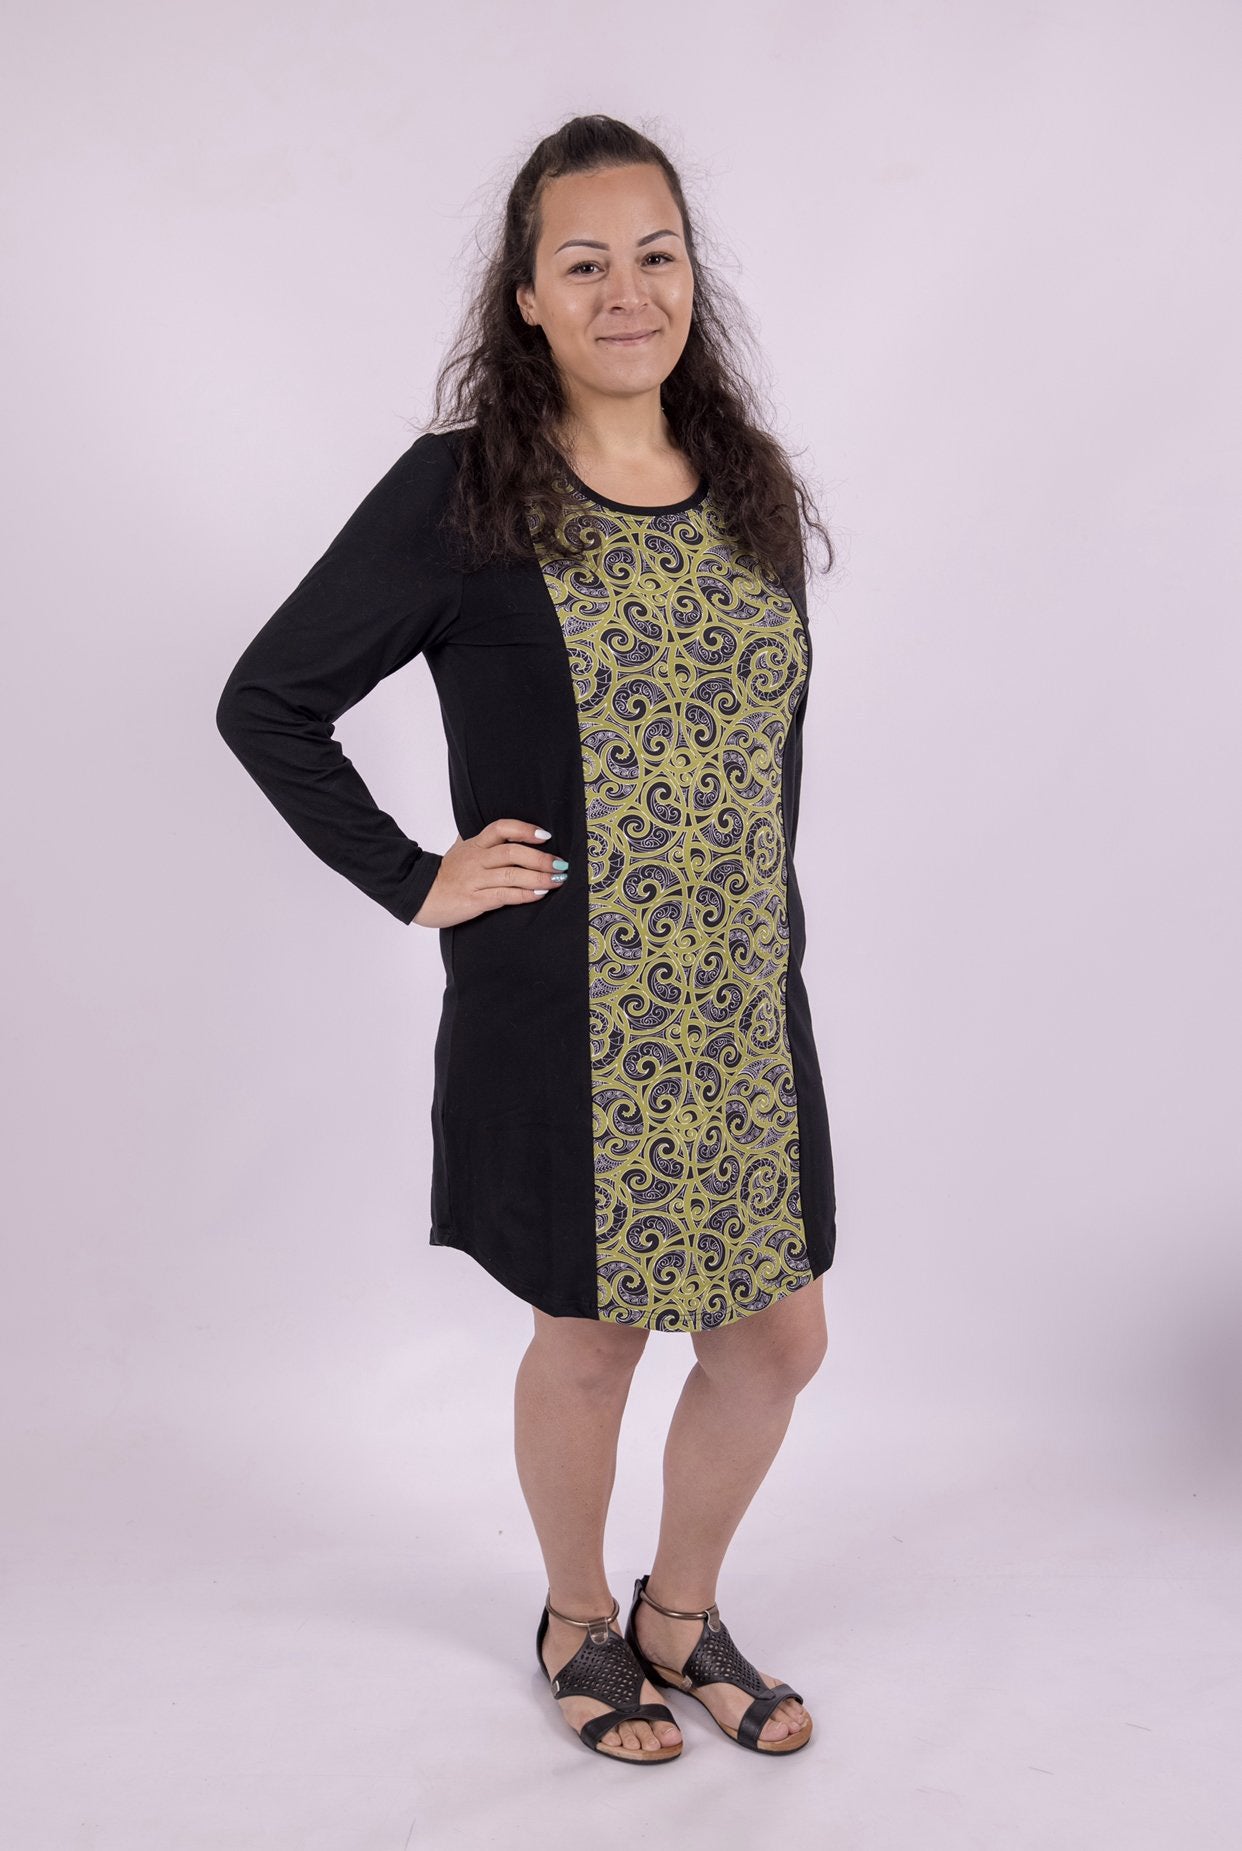 womens clothing nz maori fashion long sleeve t-shirt dress by Emere Designs